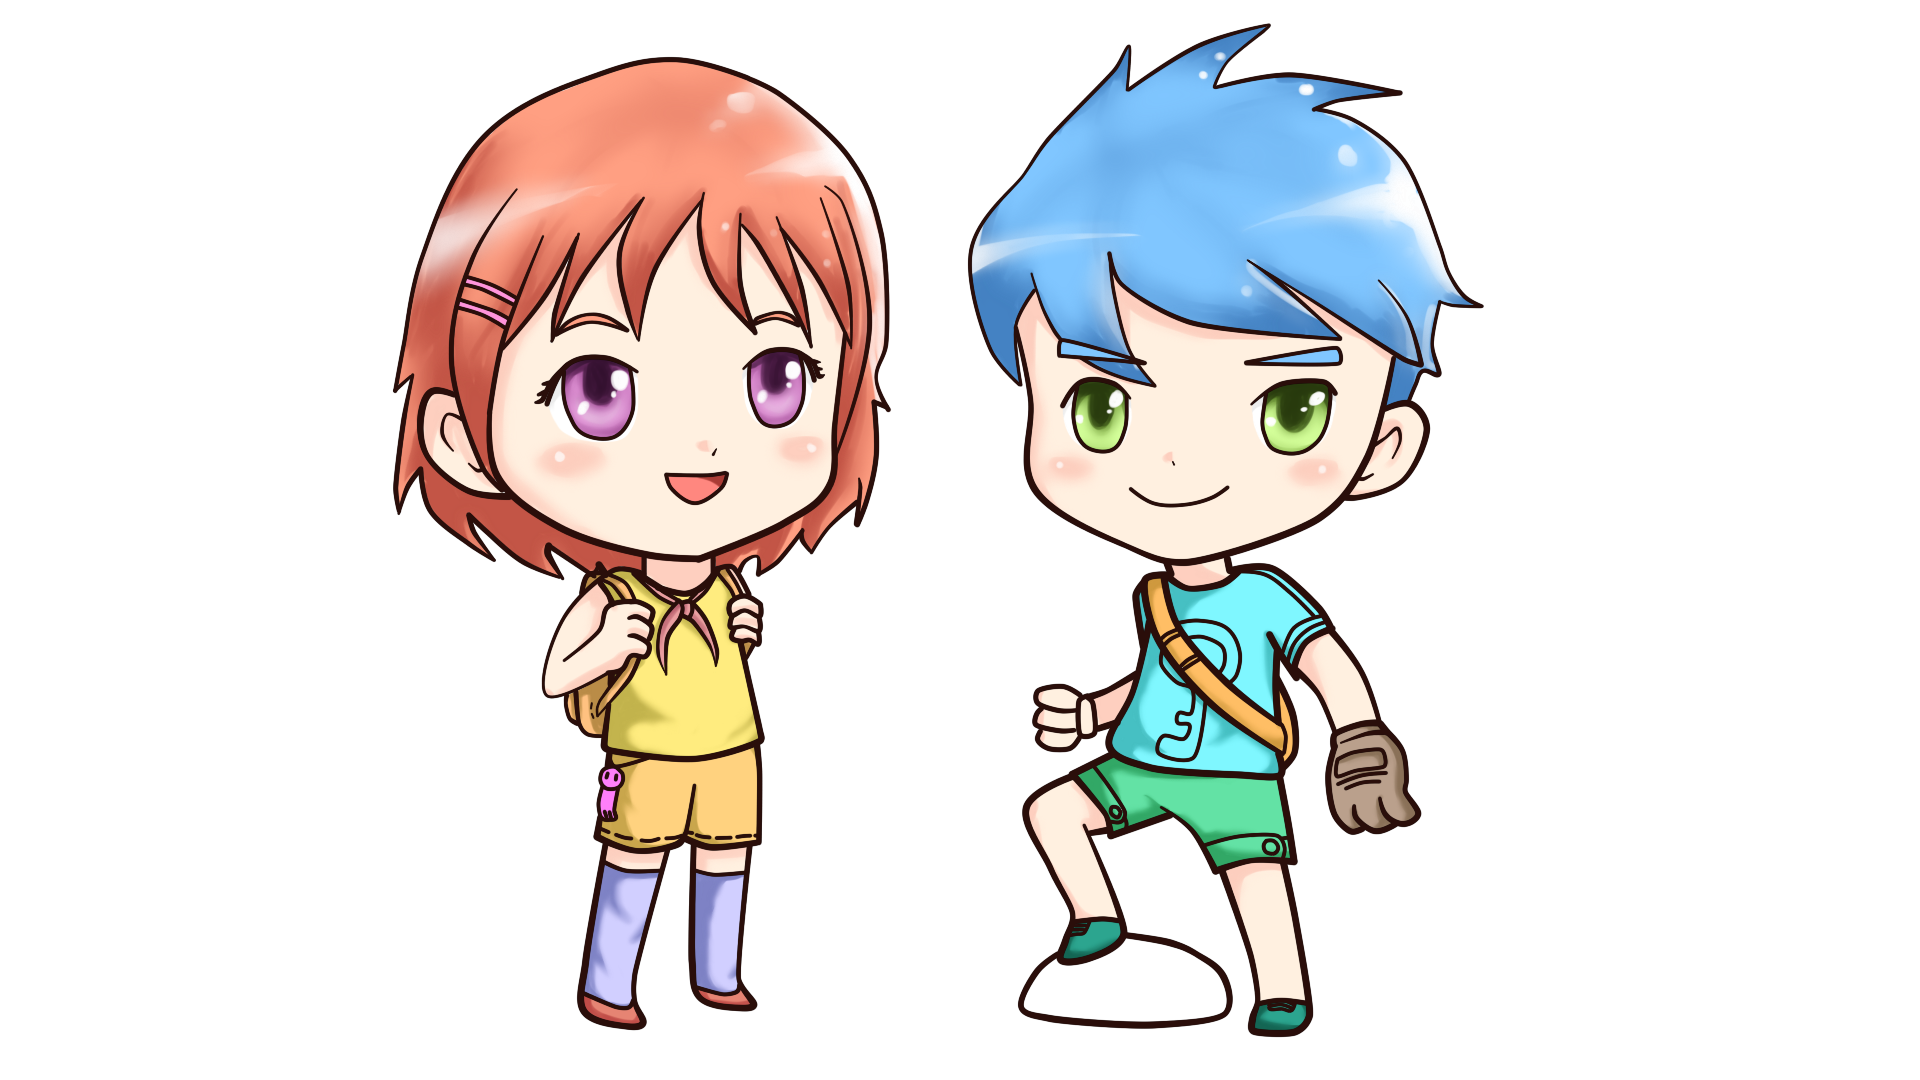 Little Anime Boy and Girl